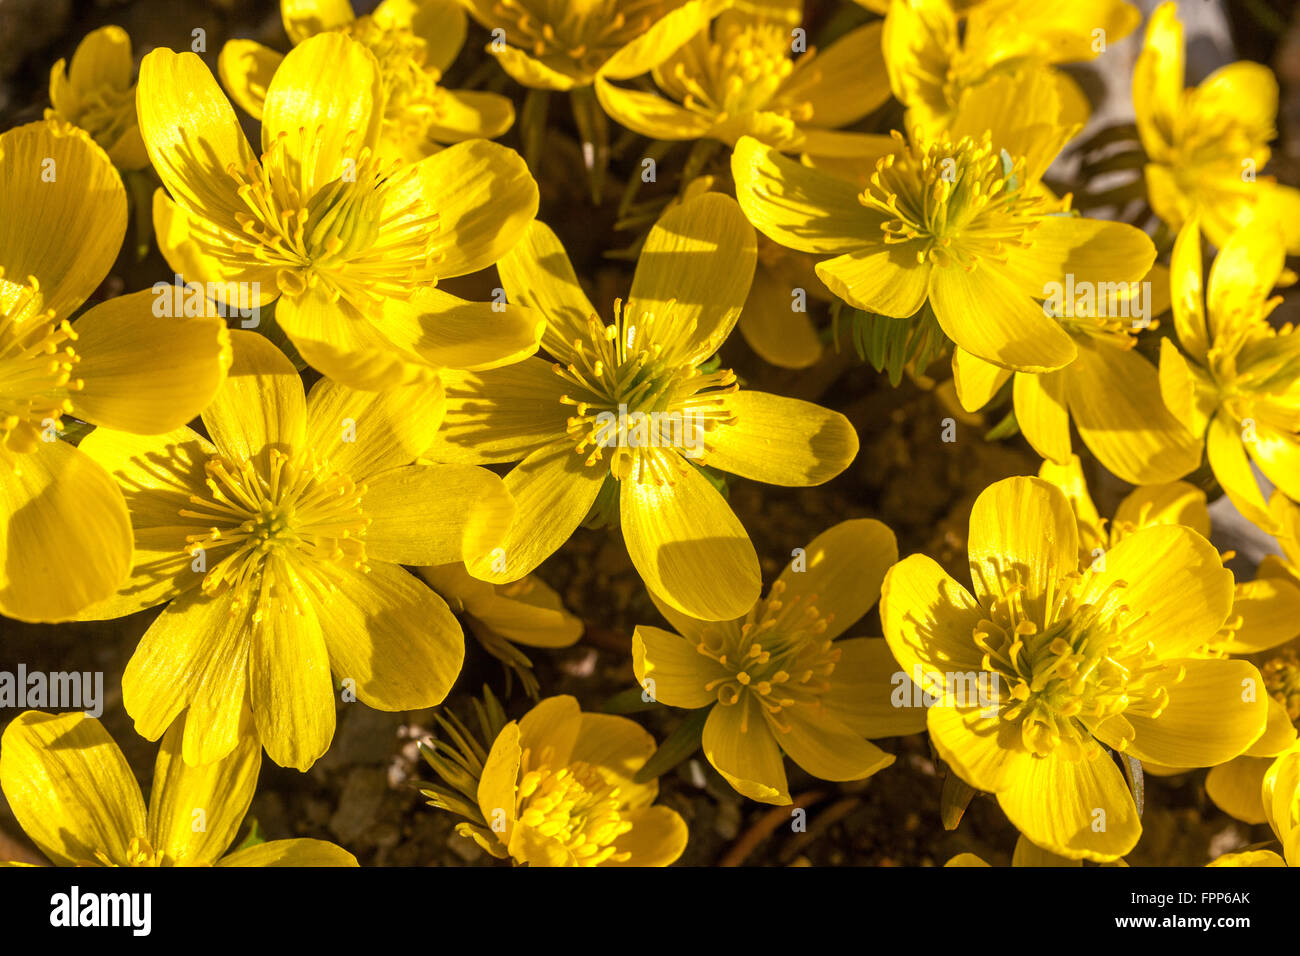 Eranthis hyemalis Cilicica, winter aconite blooming flowers close up, aconites Stock Photo